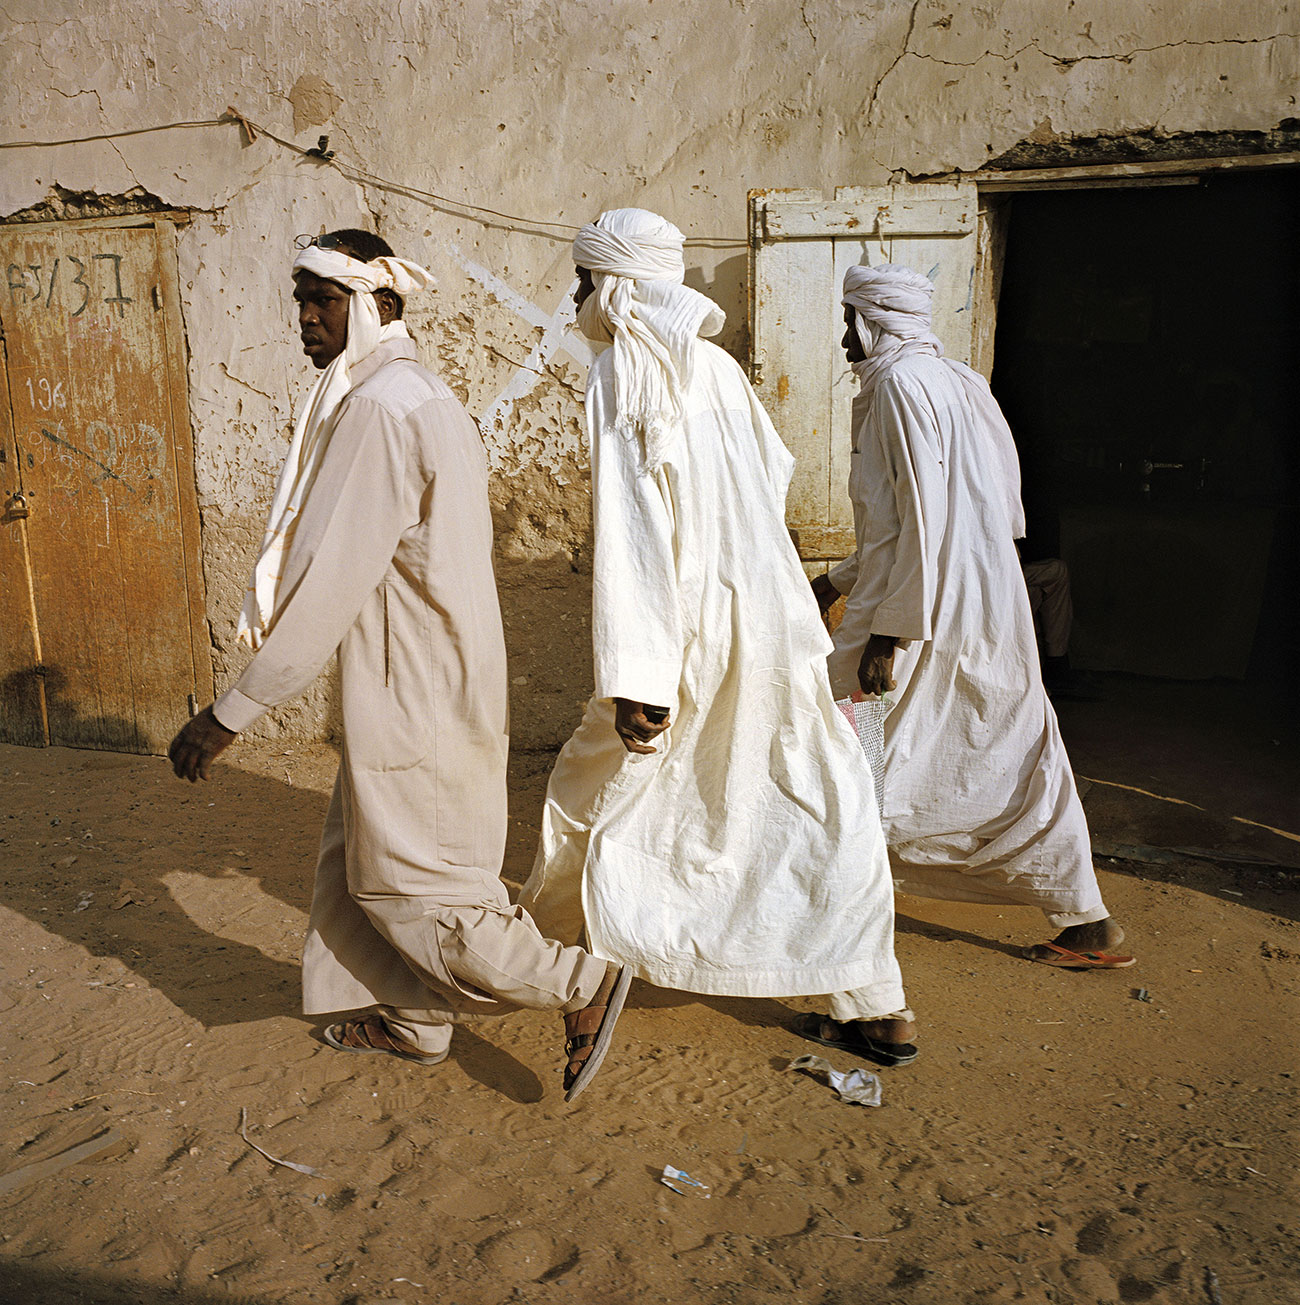 Faya Largeau, Tchad, 2013 © Raymond Depardon, Magnum photos